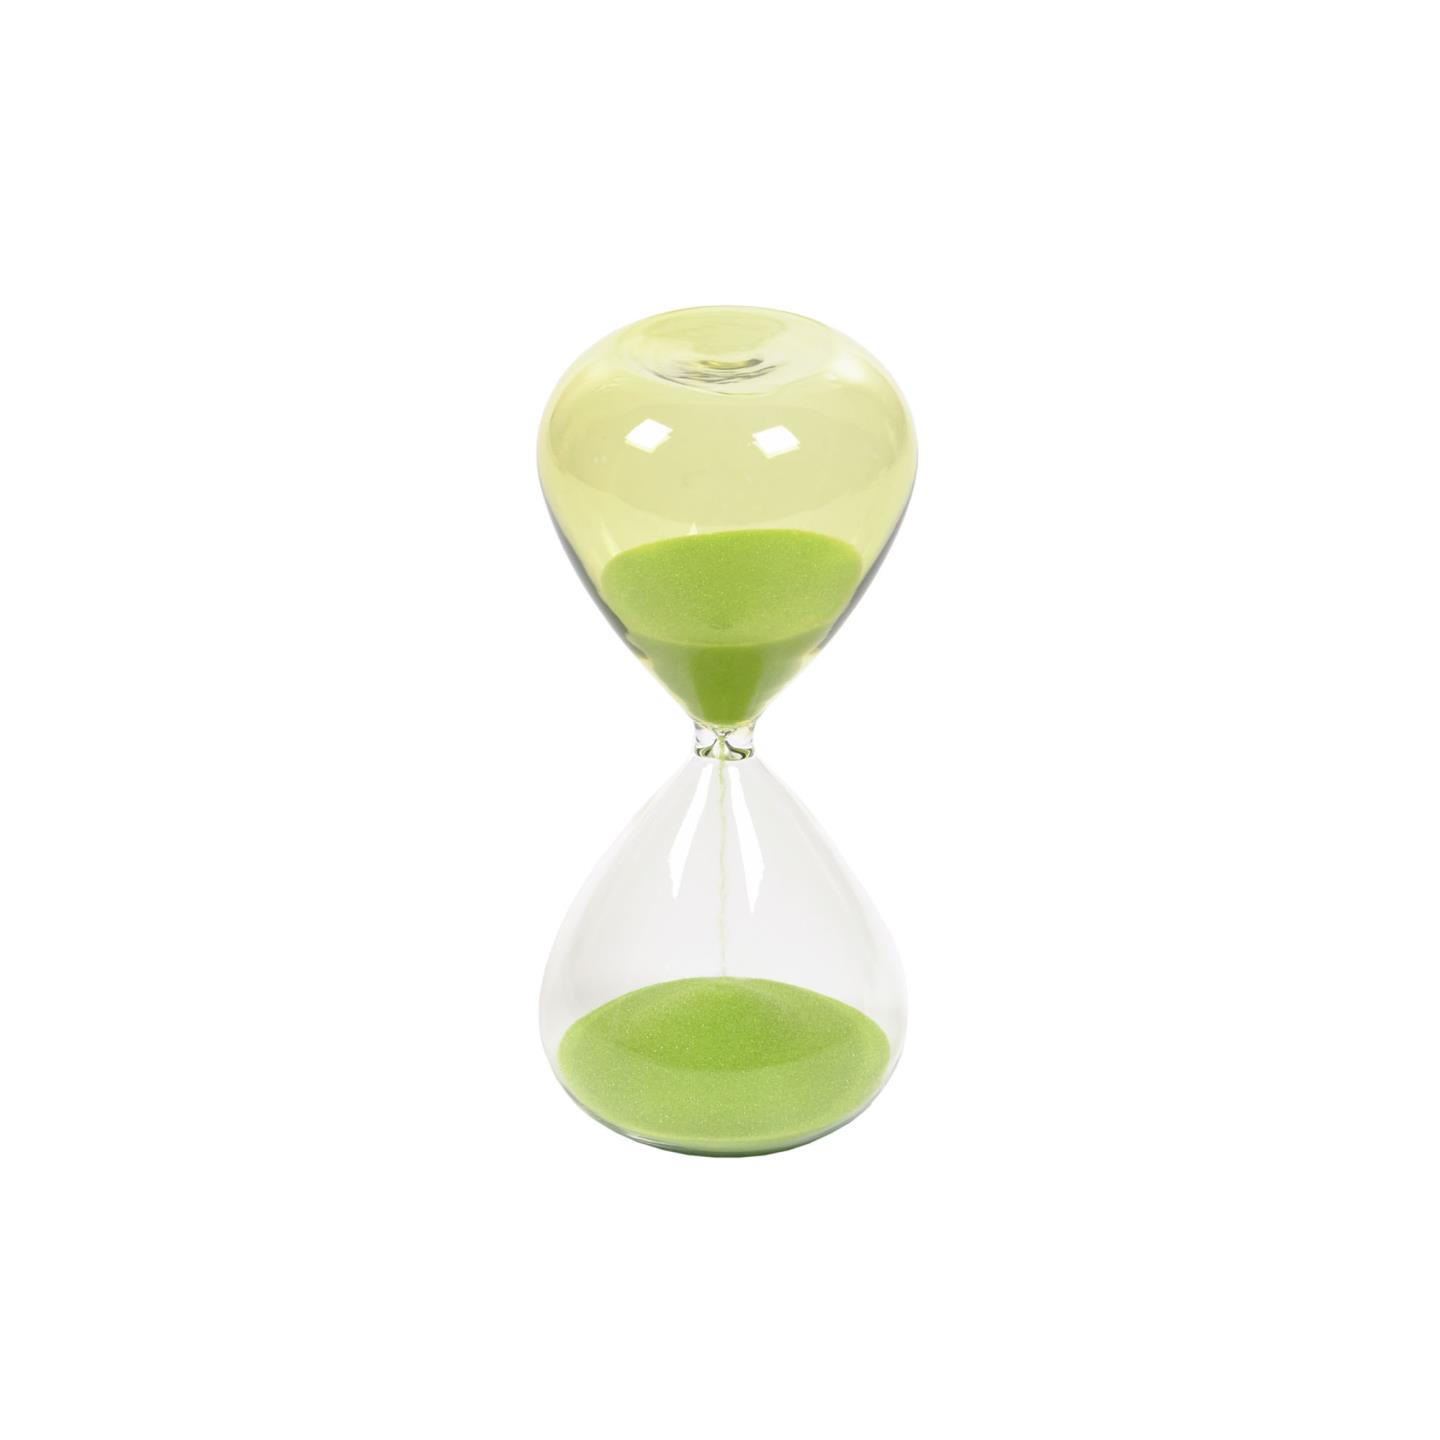 Песочные часы Breshna 14 cm зеленые